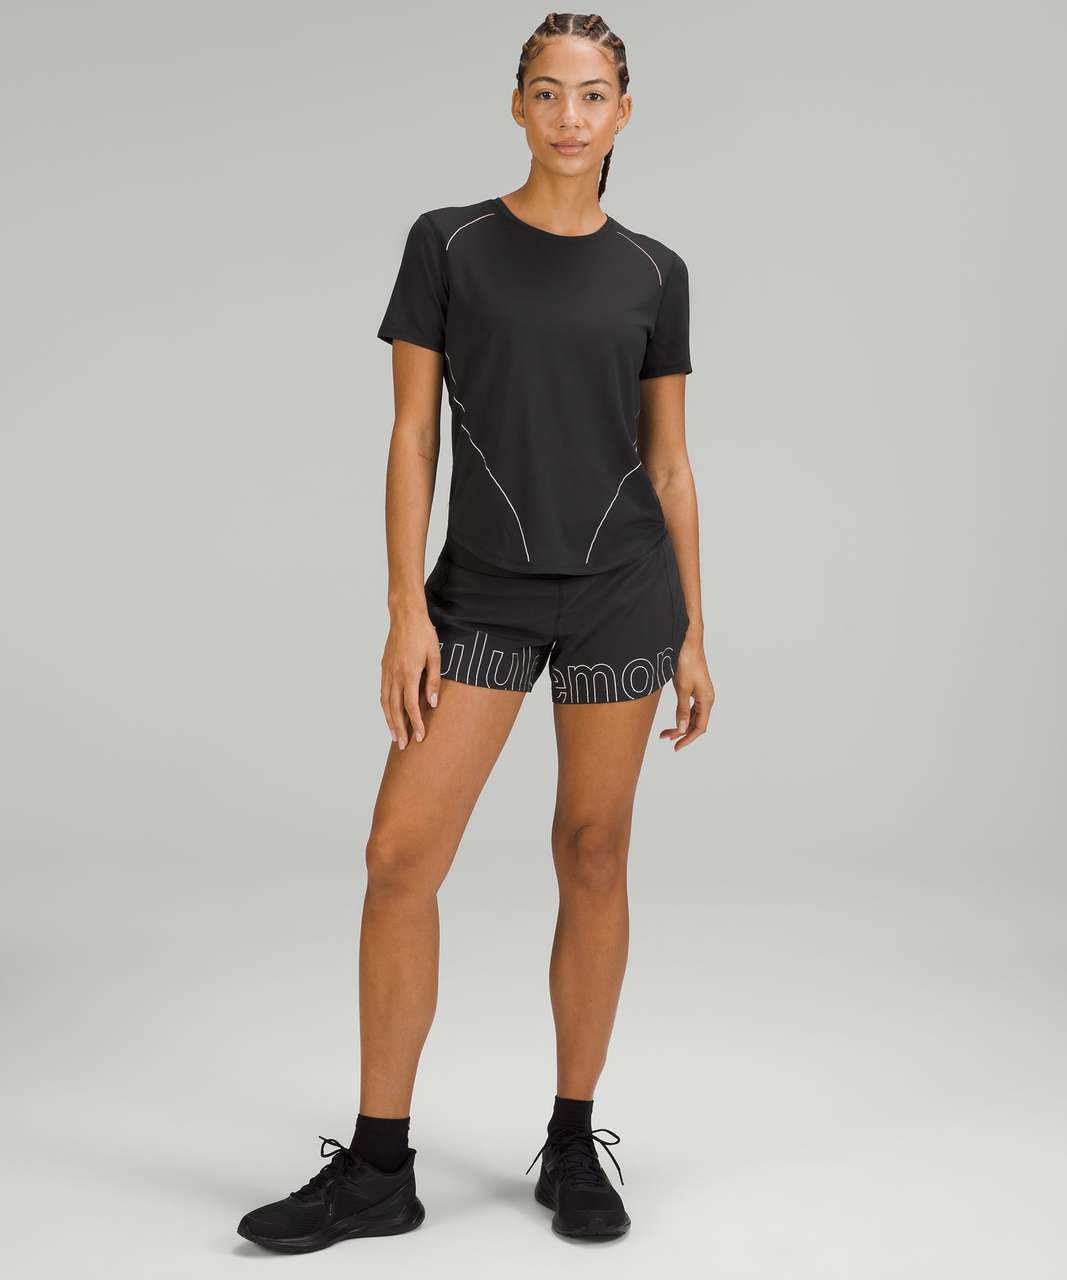 Lululemon High-Neck Running and Training Reflective T-Shirt - Black